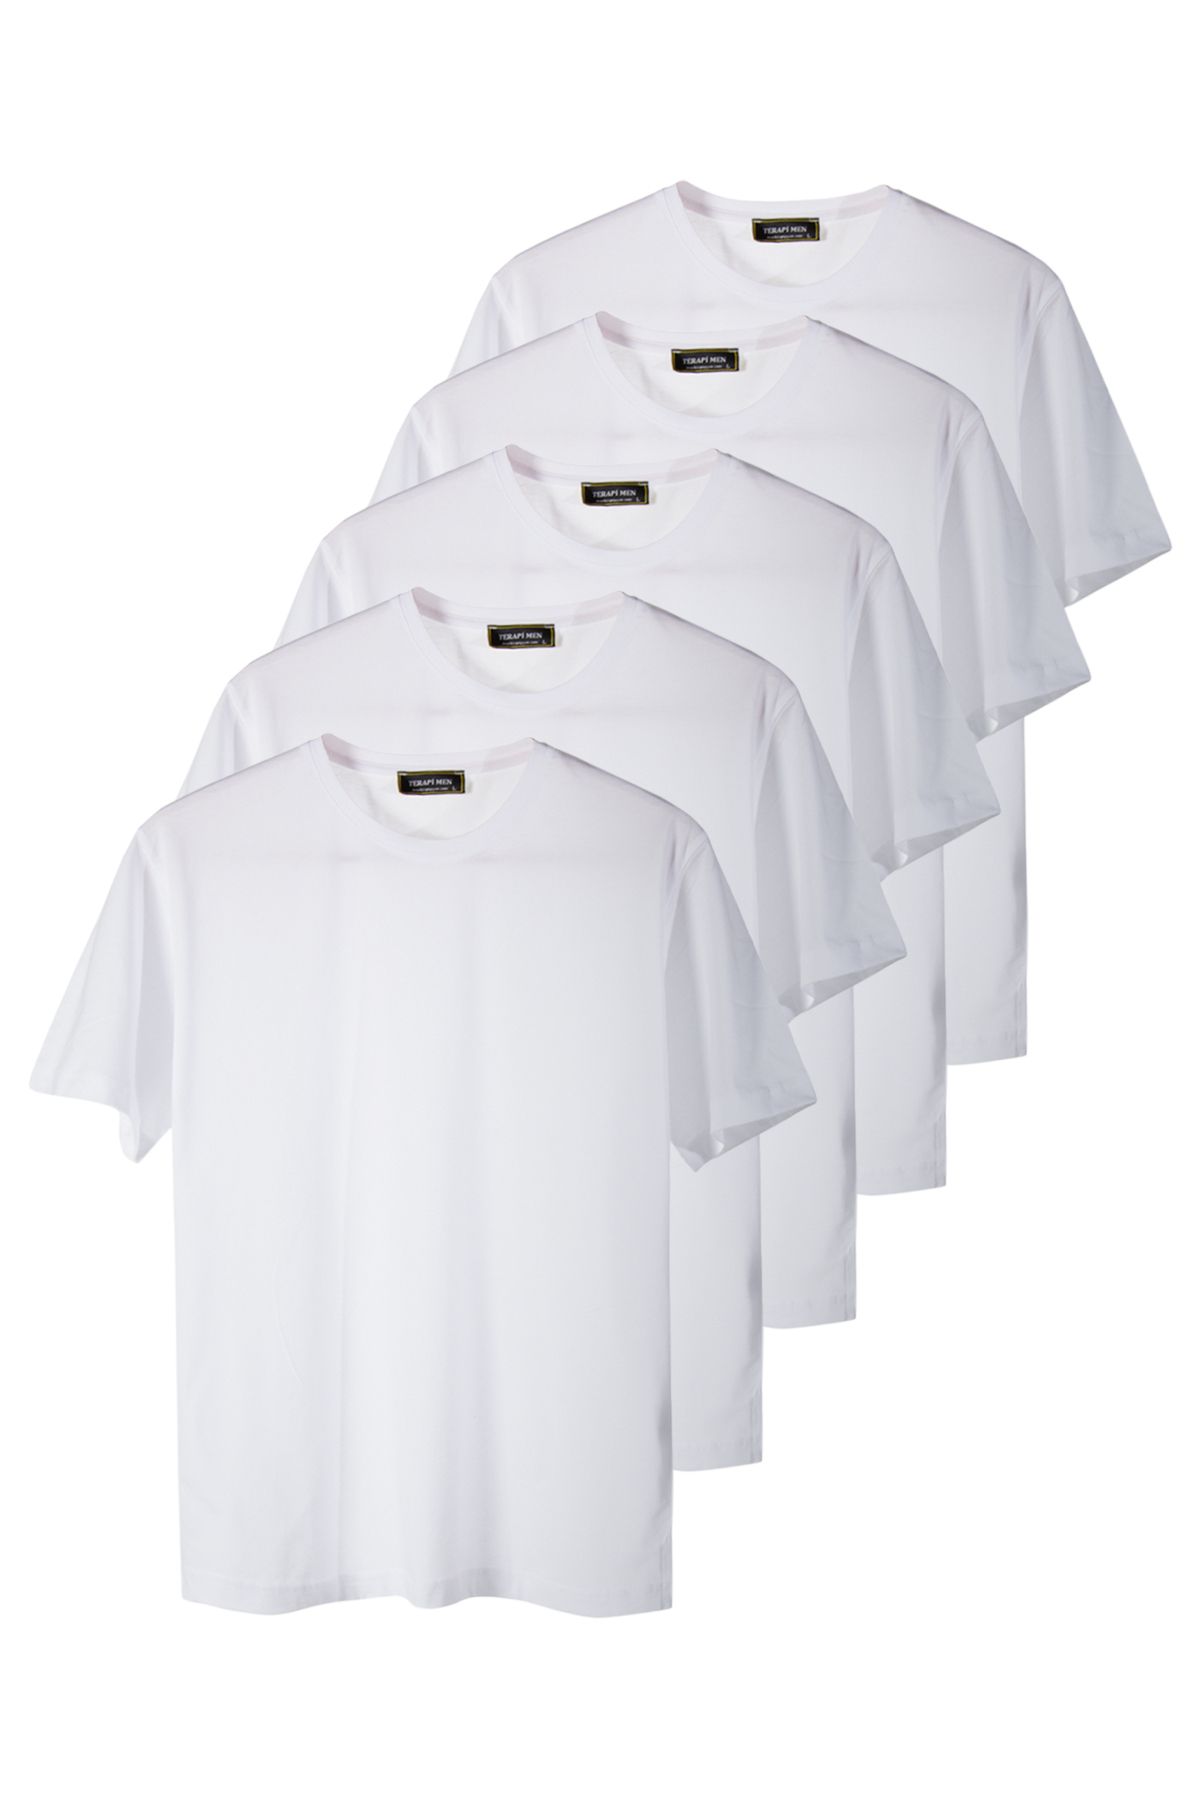 Terapi Men 5'li Basic Beyaz Oversize T-shirt Paketi